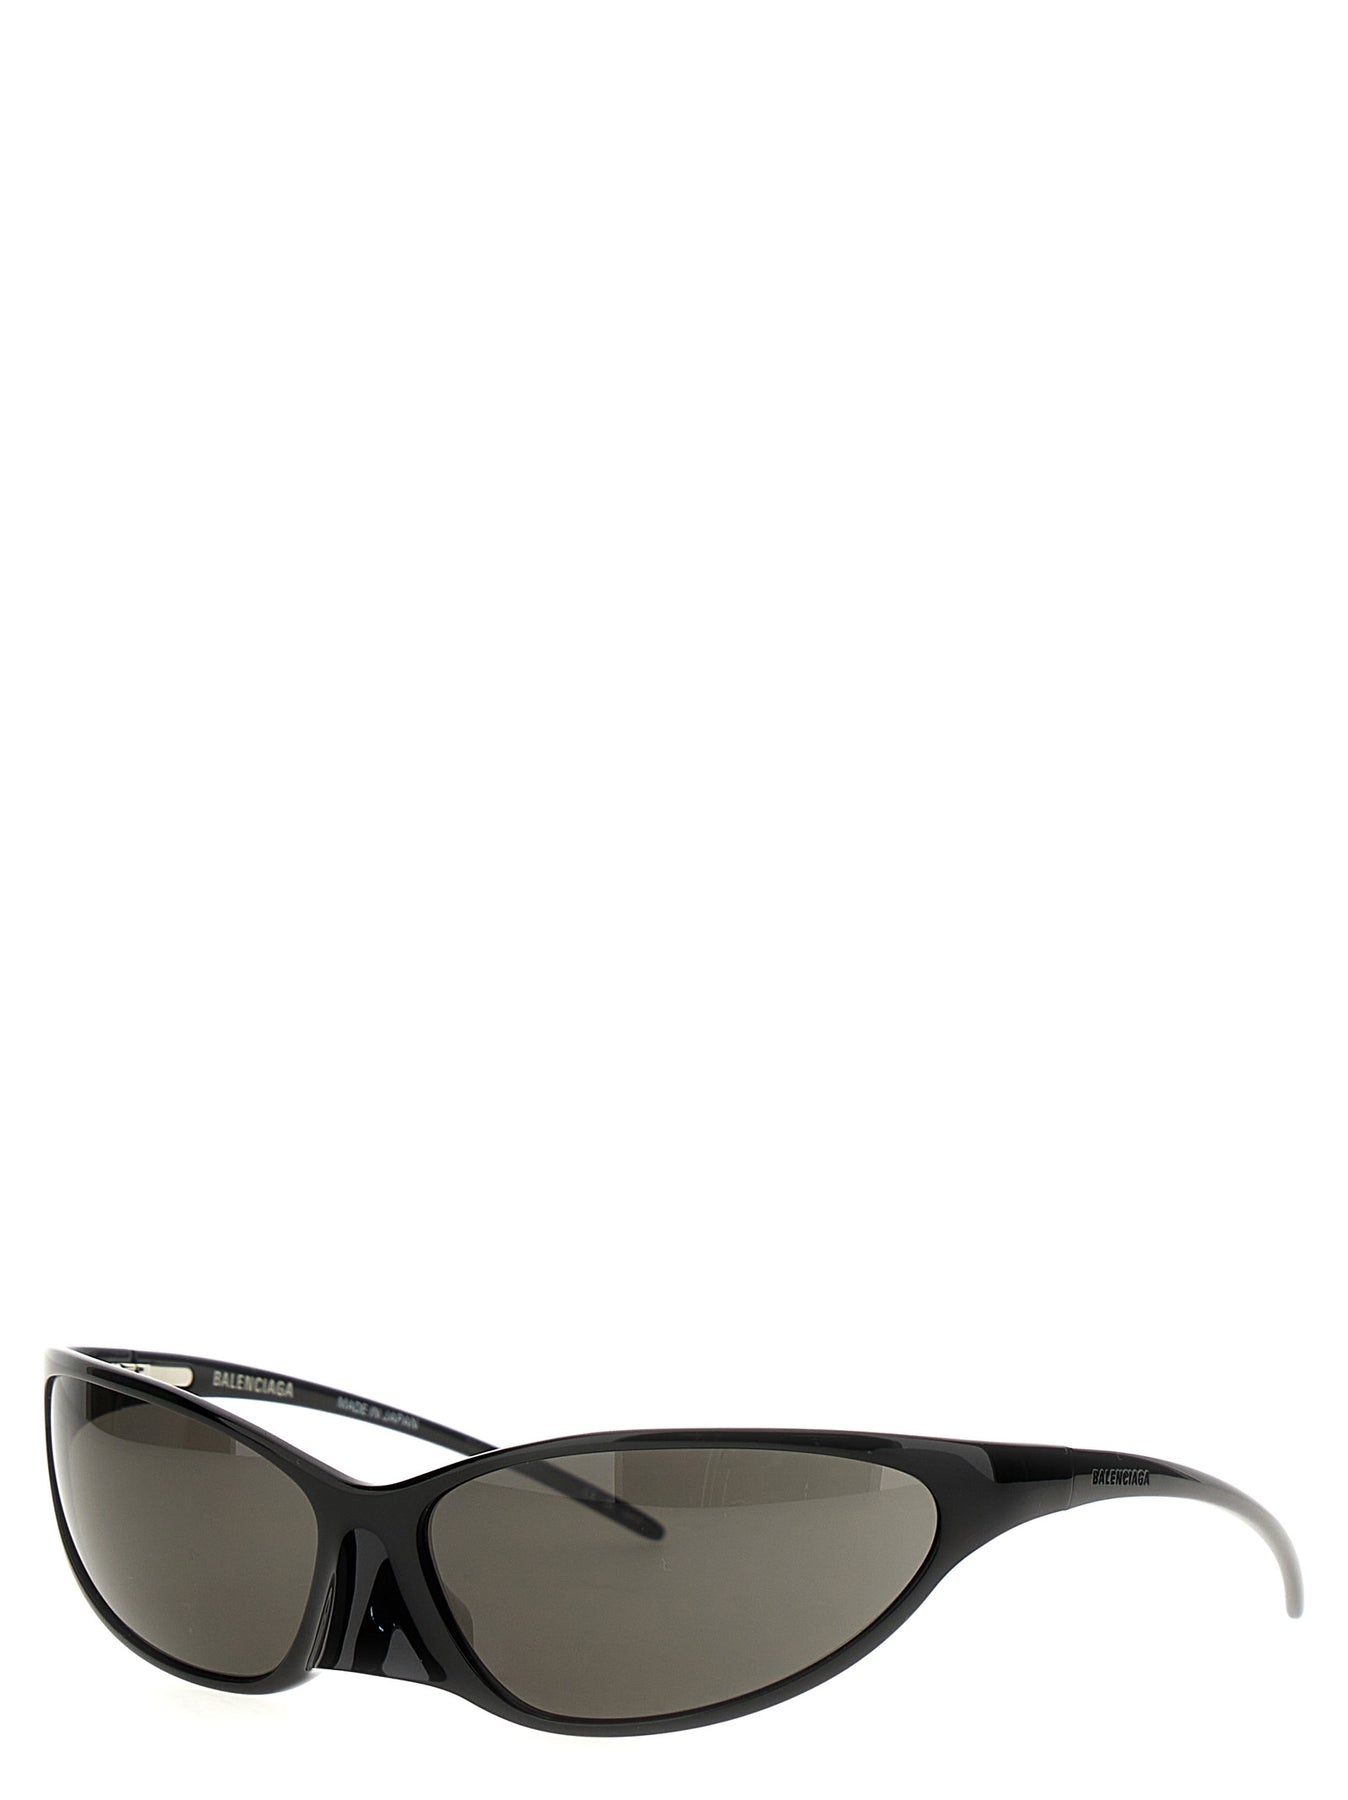 4g Cat Sunglasses Black - 3